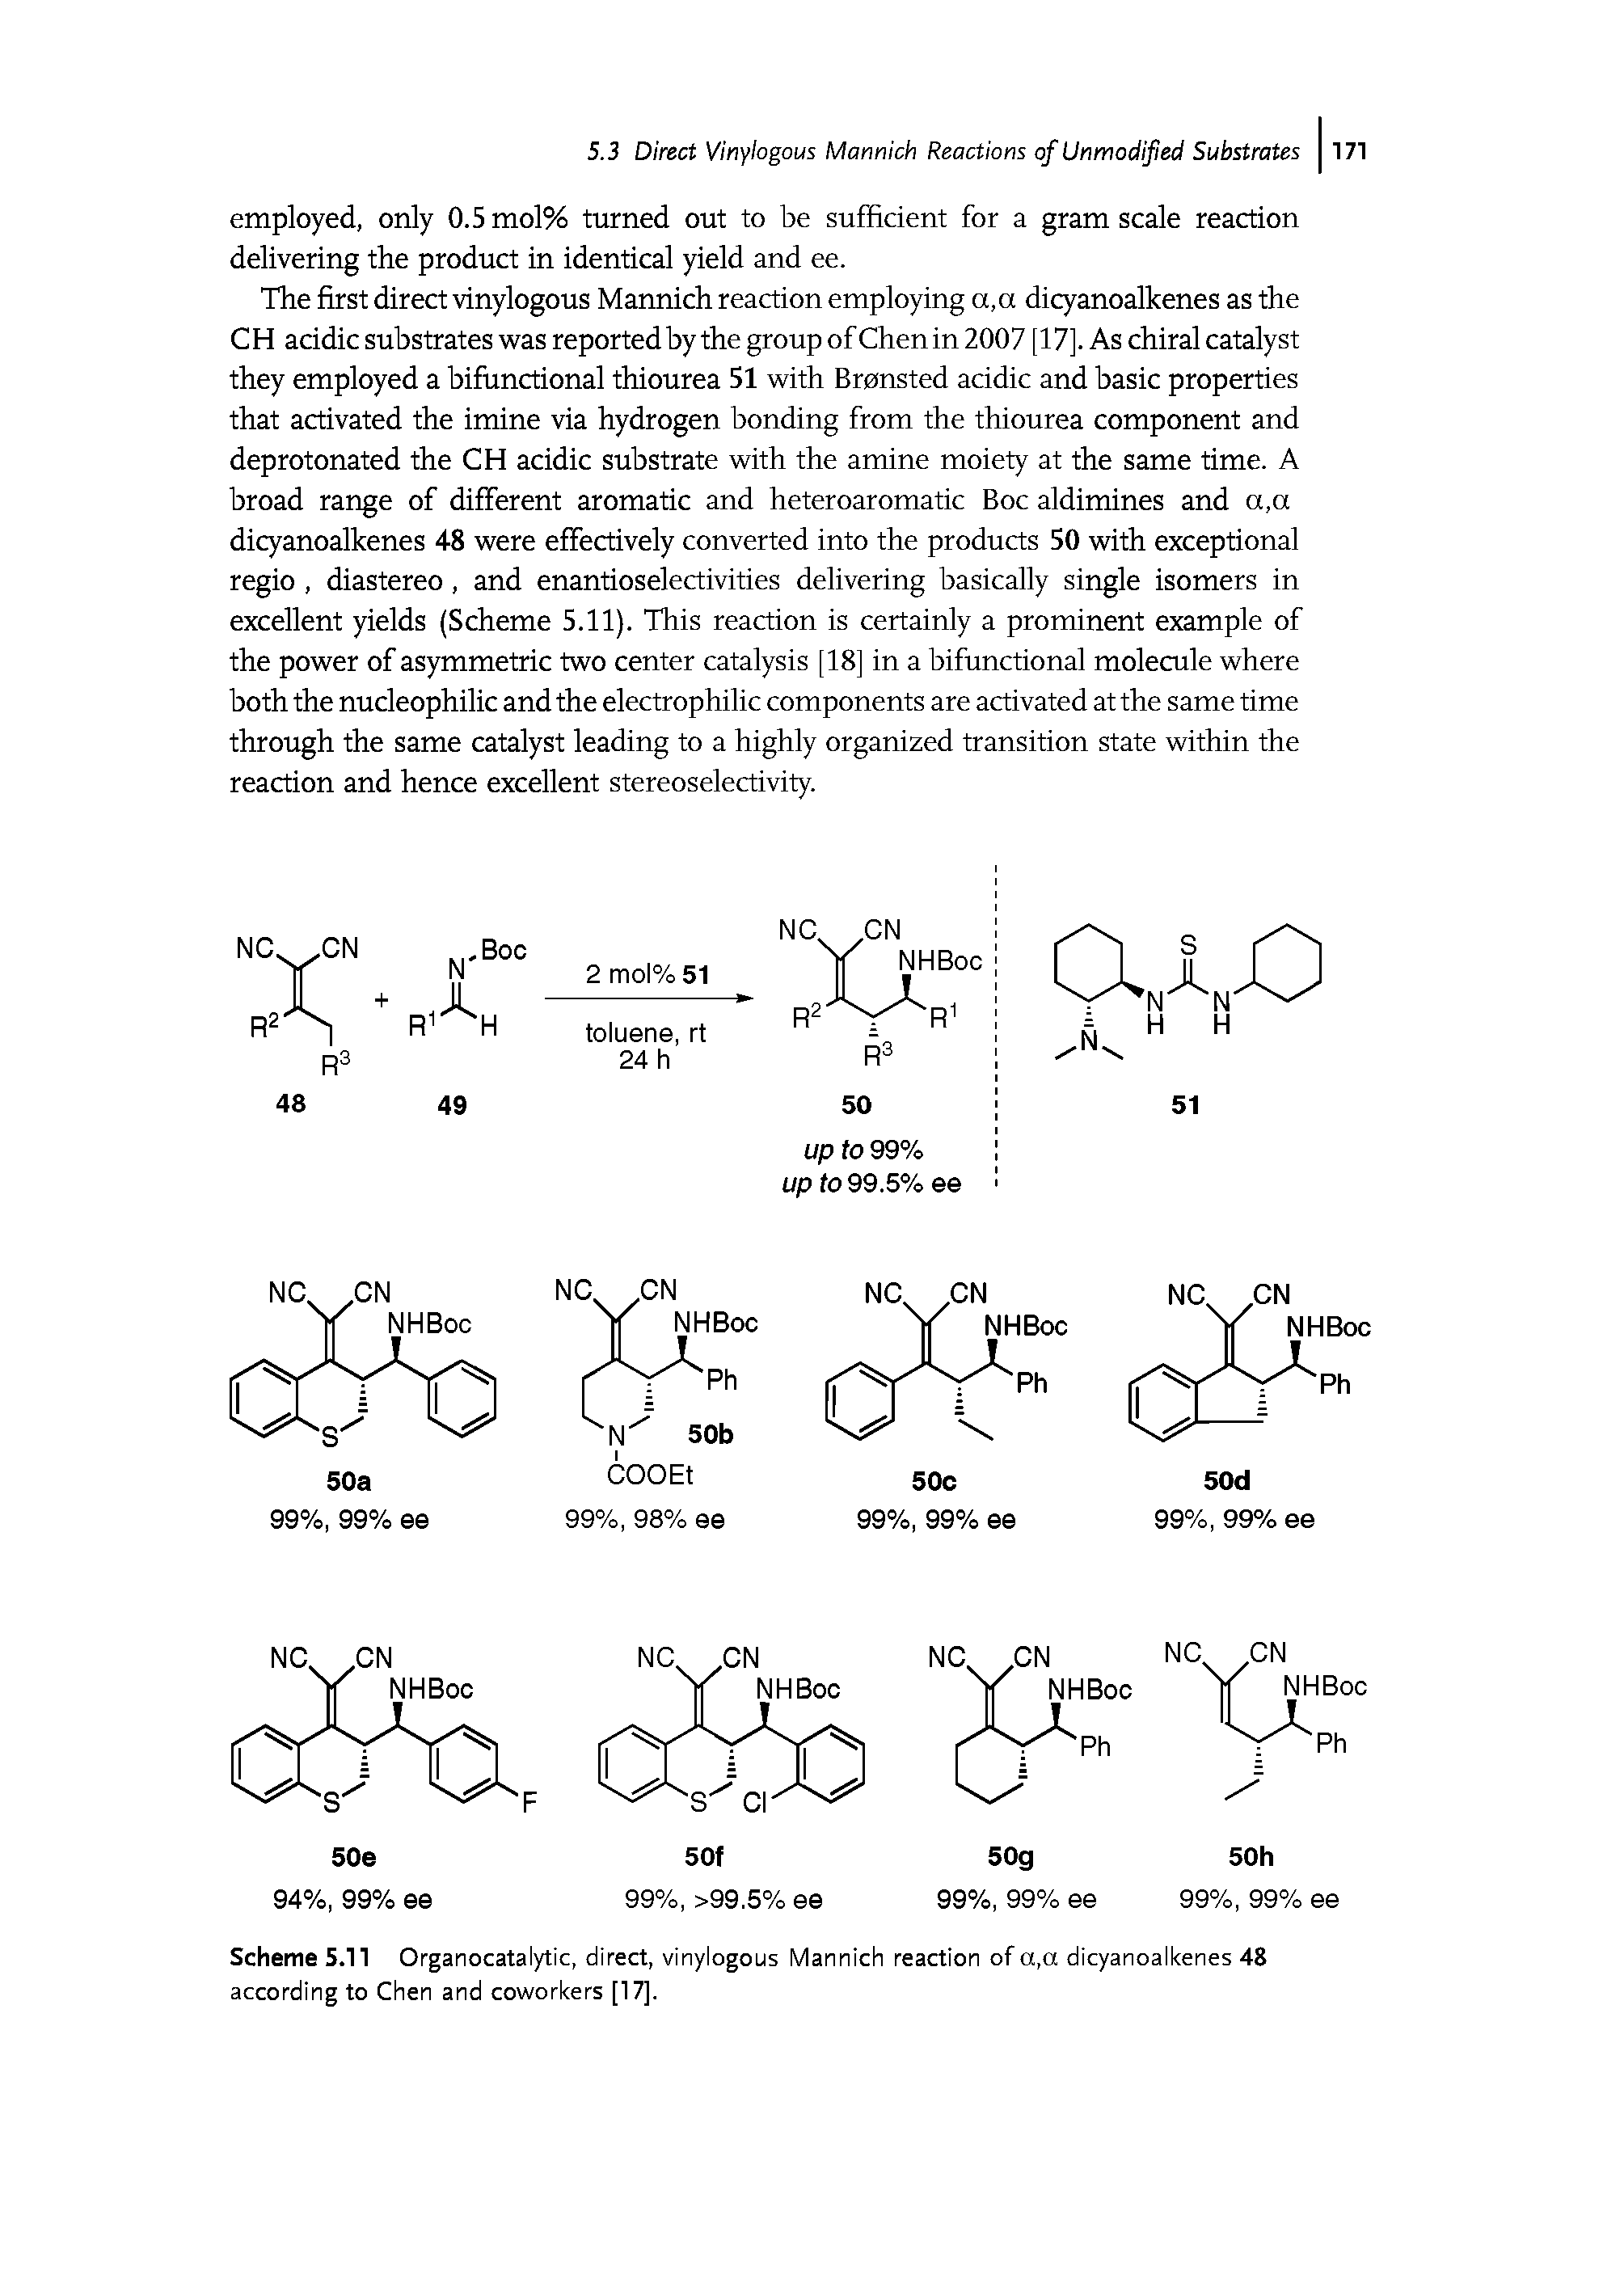 Scheme S.11 Organocatalytic, direct, vinylogous Mannich reaction of a,a dicyanoalkenes 48...